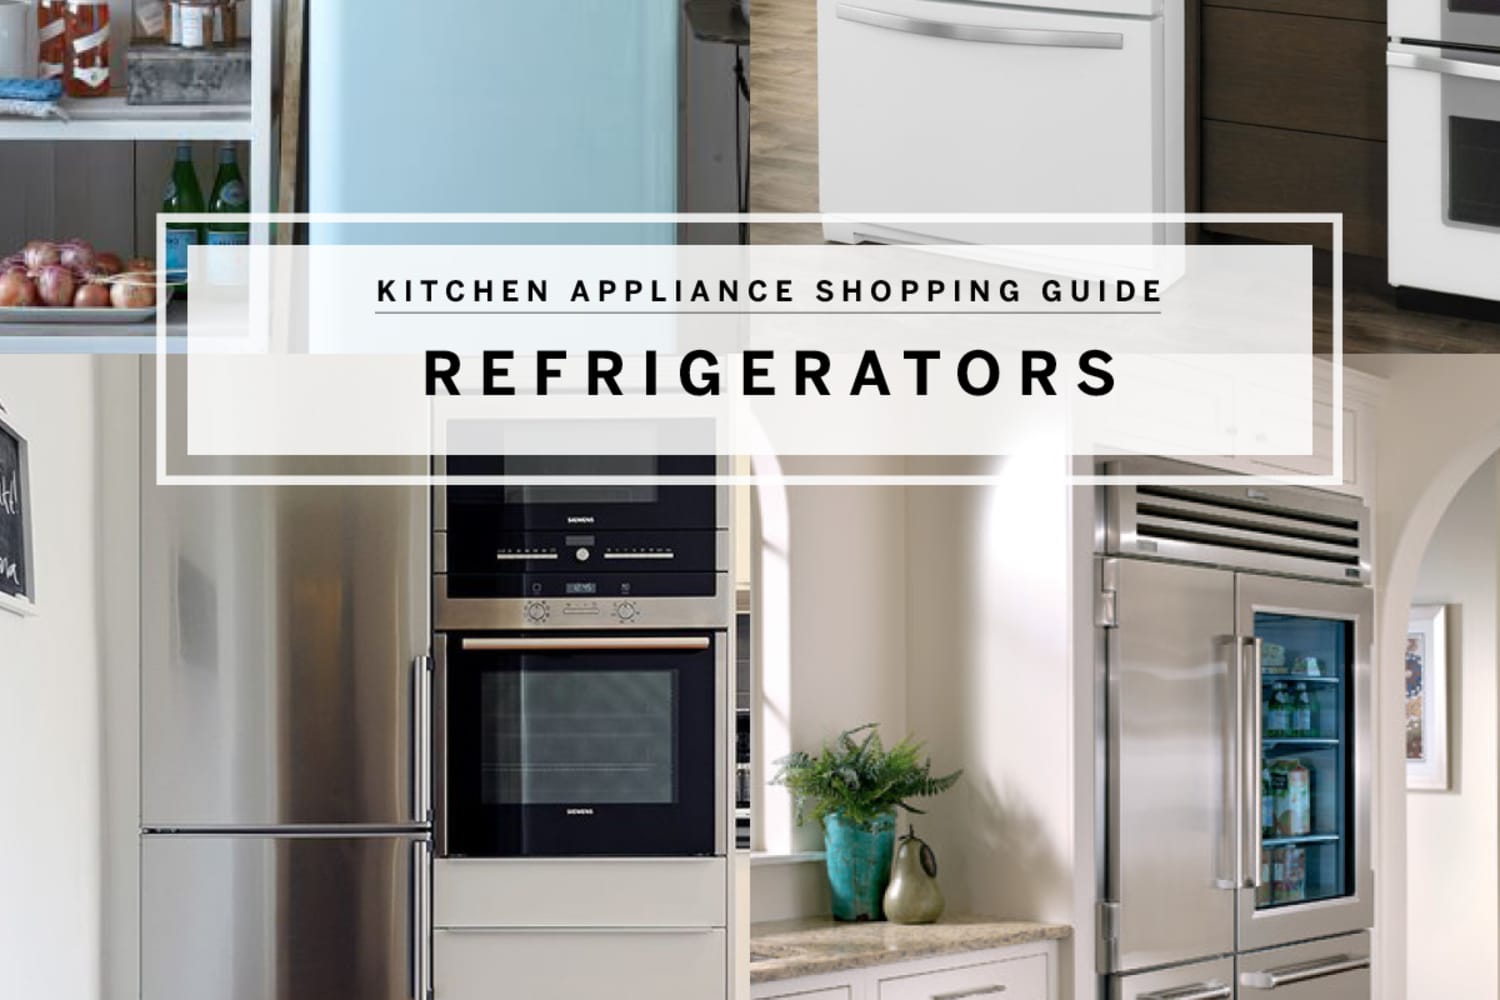 A Pair of Freezer Baskets - appliances - by owner - sale - craigslist